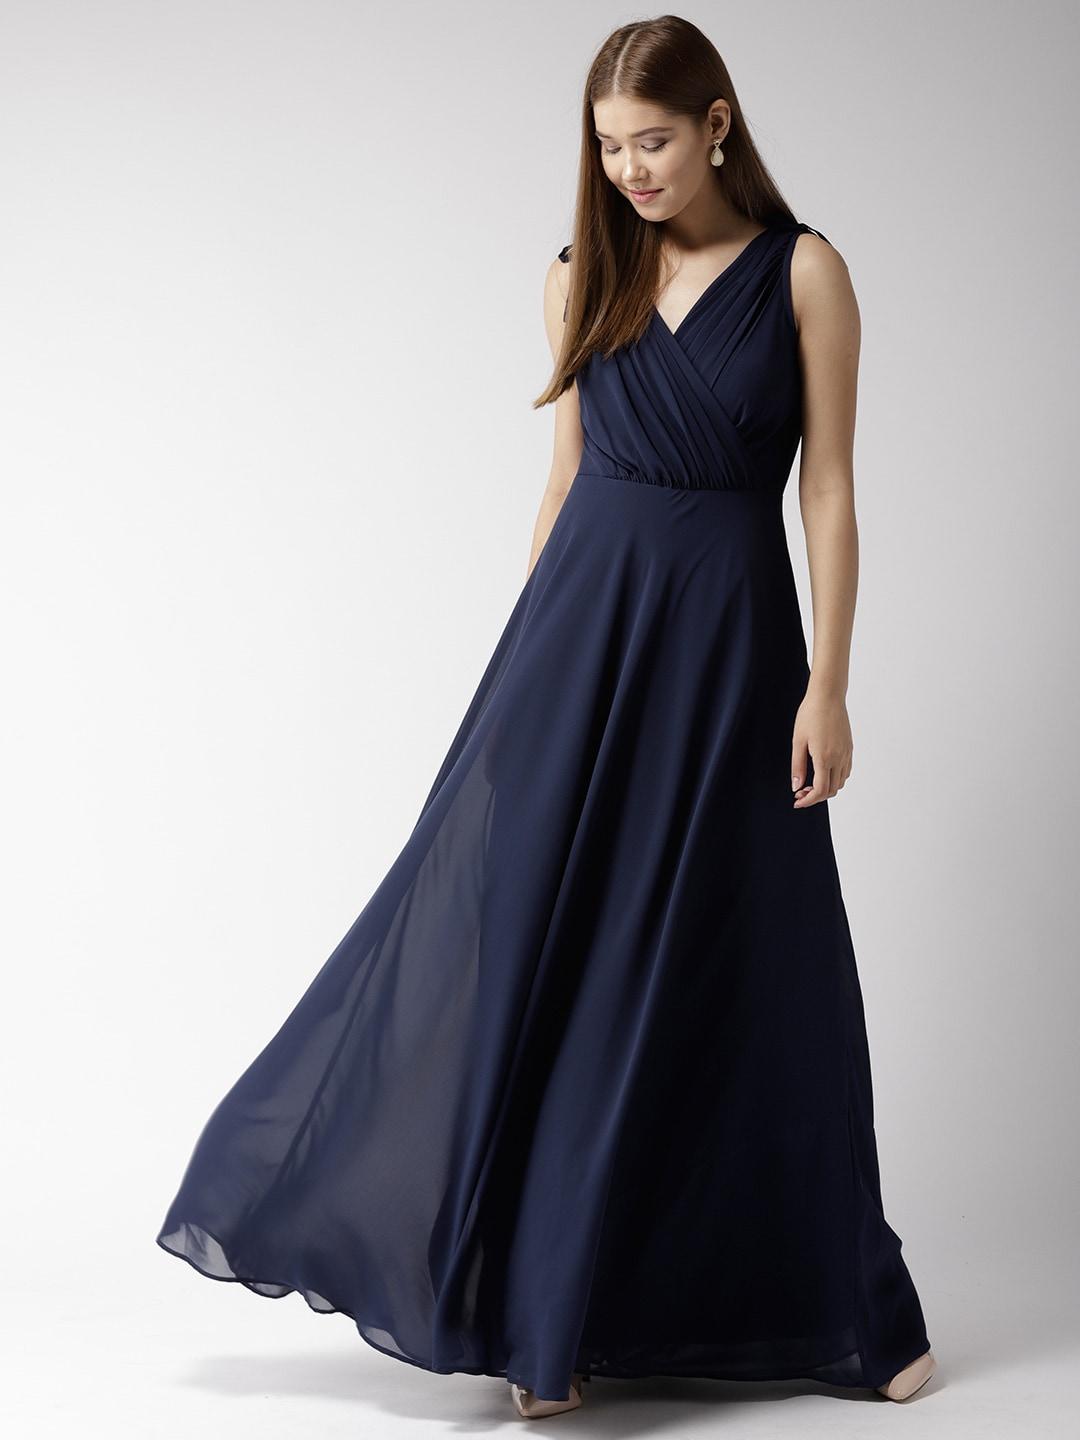 20dresses women navy blue solid maxi dress